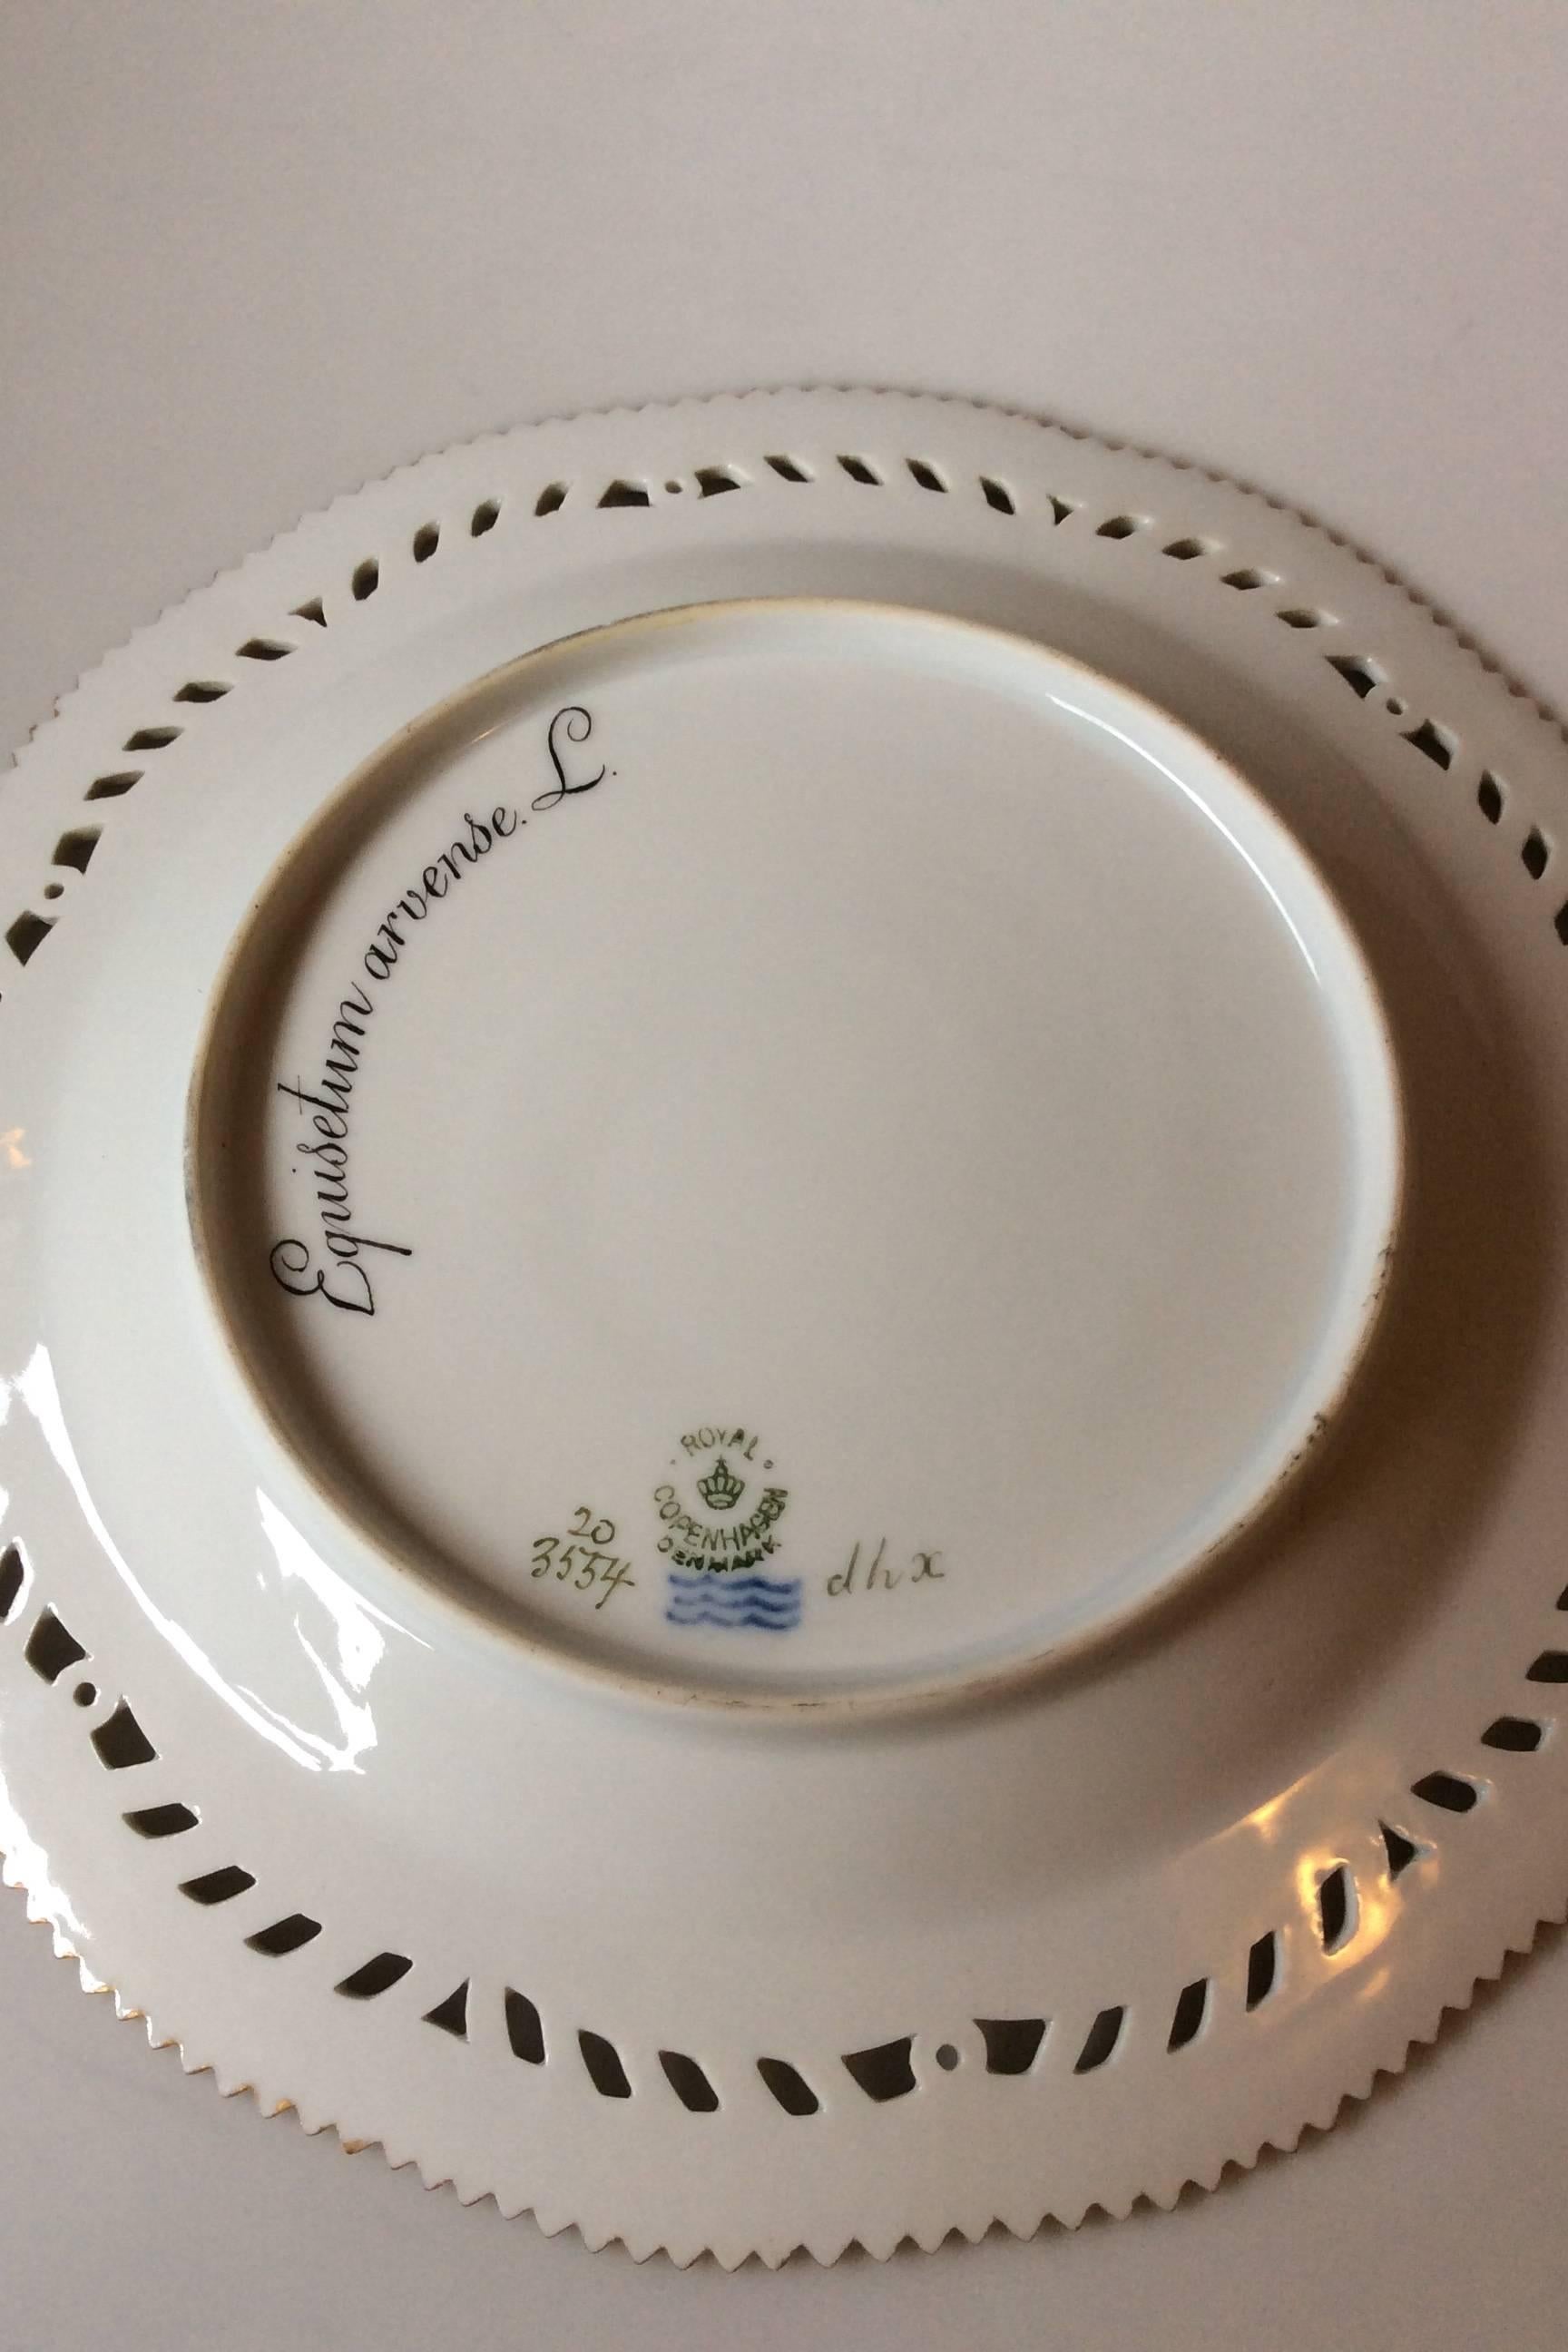 Royal Copenhagen Flora Danica lunch plate with pierced border no. 3554.

Measures 23cm / 9 1/16